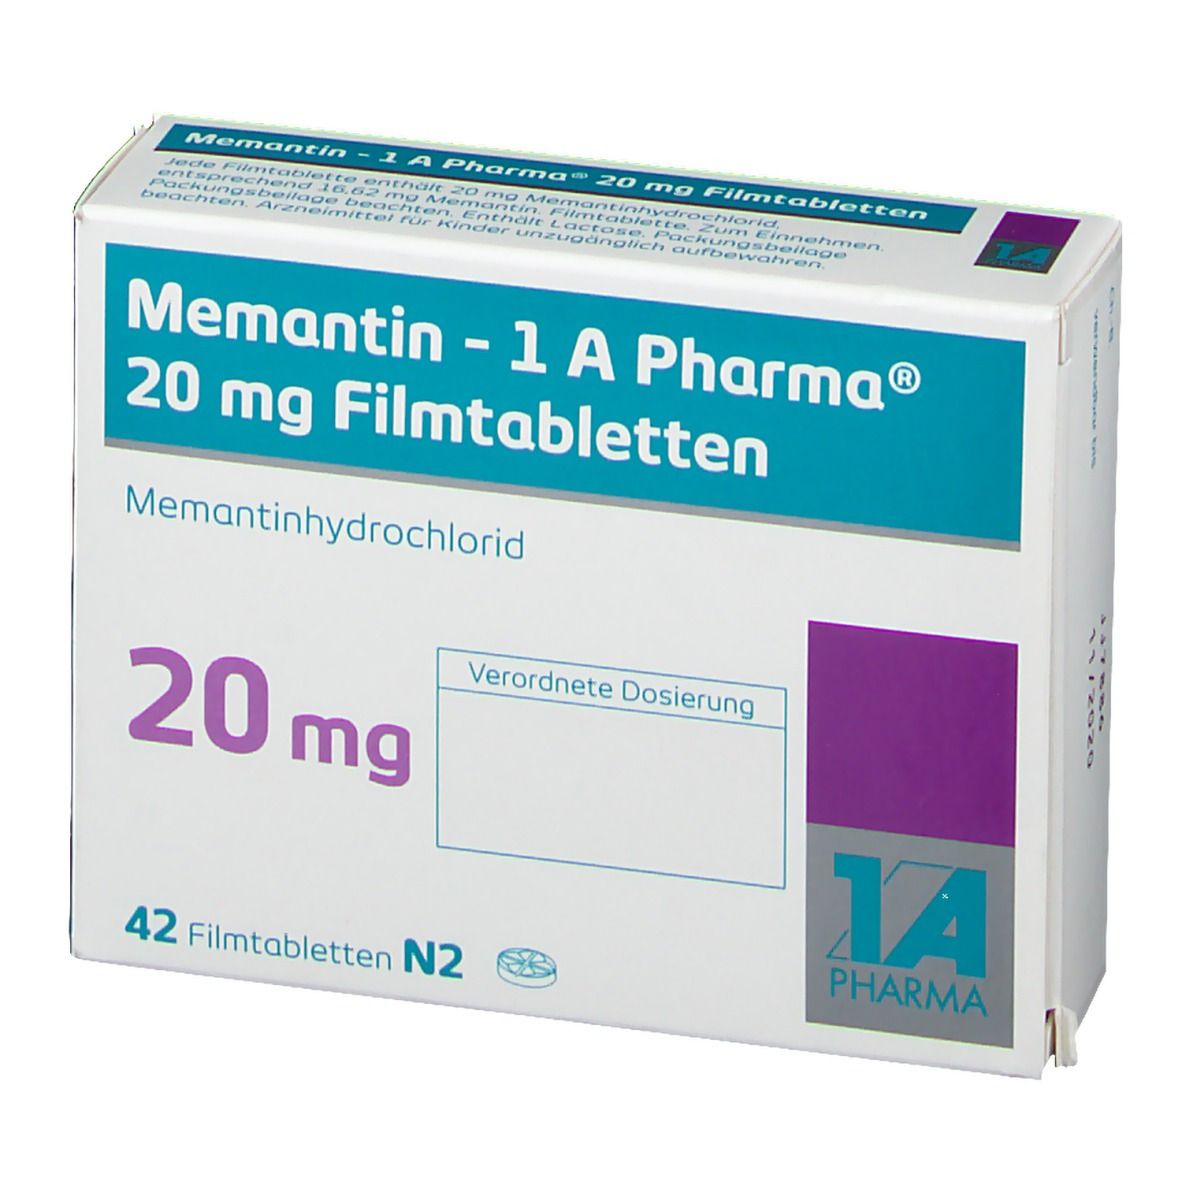 Memantin - 1 A Pharma® 20 mg